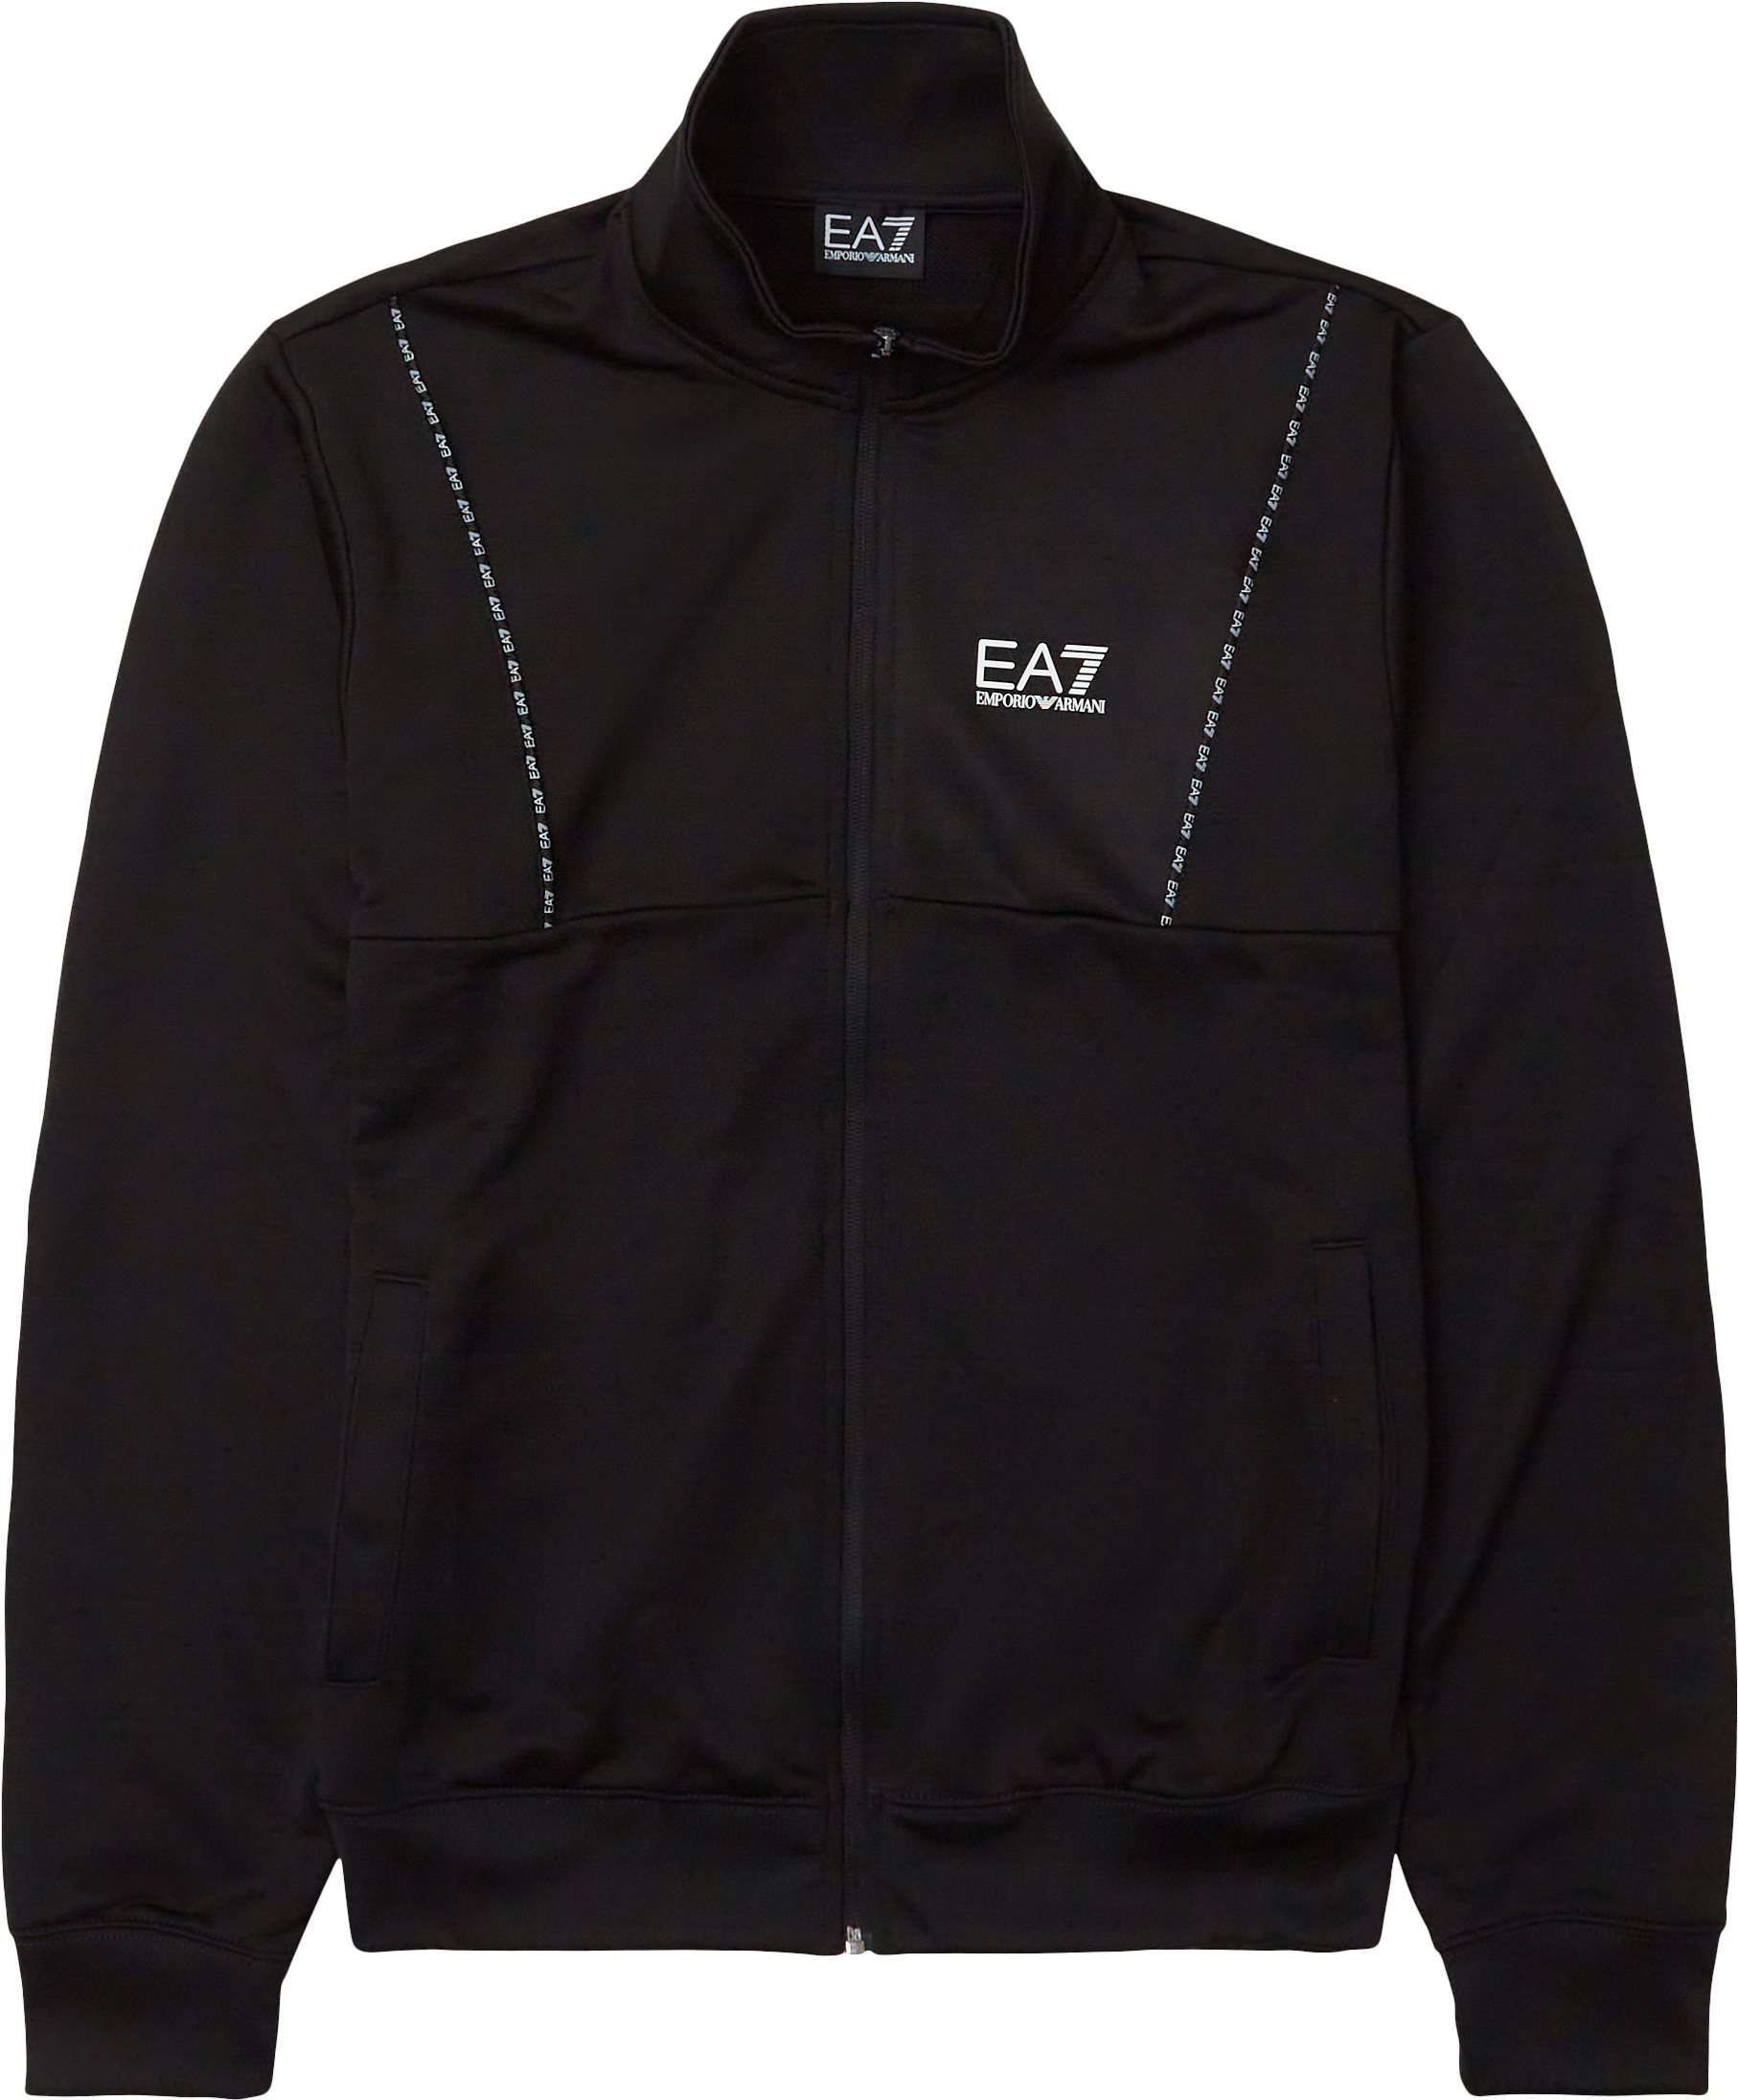 Pjhbz-3lpm85 Zip Sweatshirt - Sweatshirts - Regular fit - Black